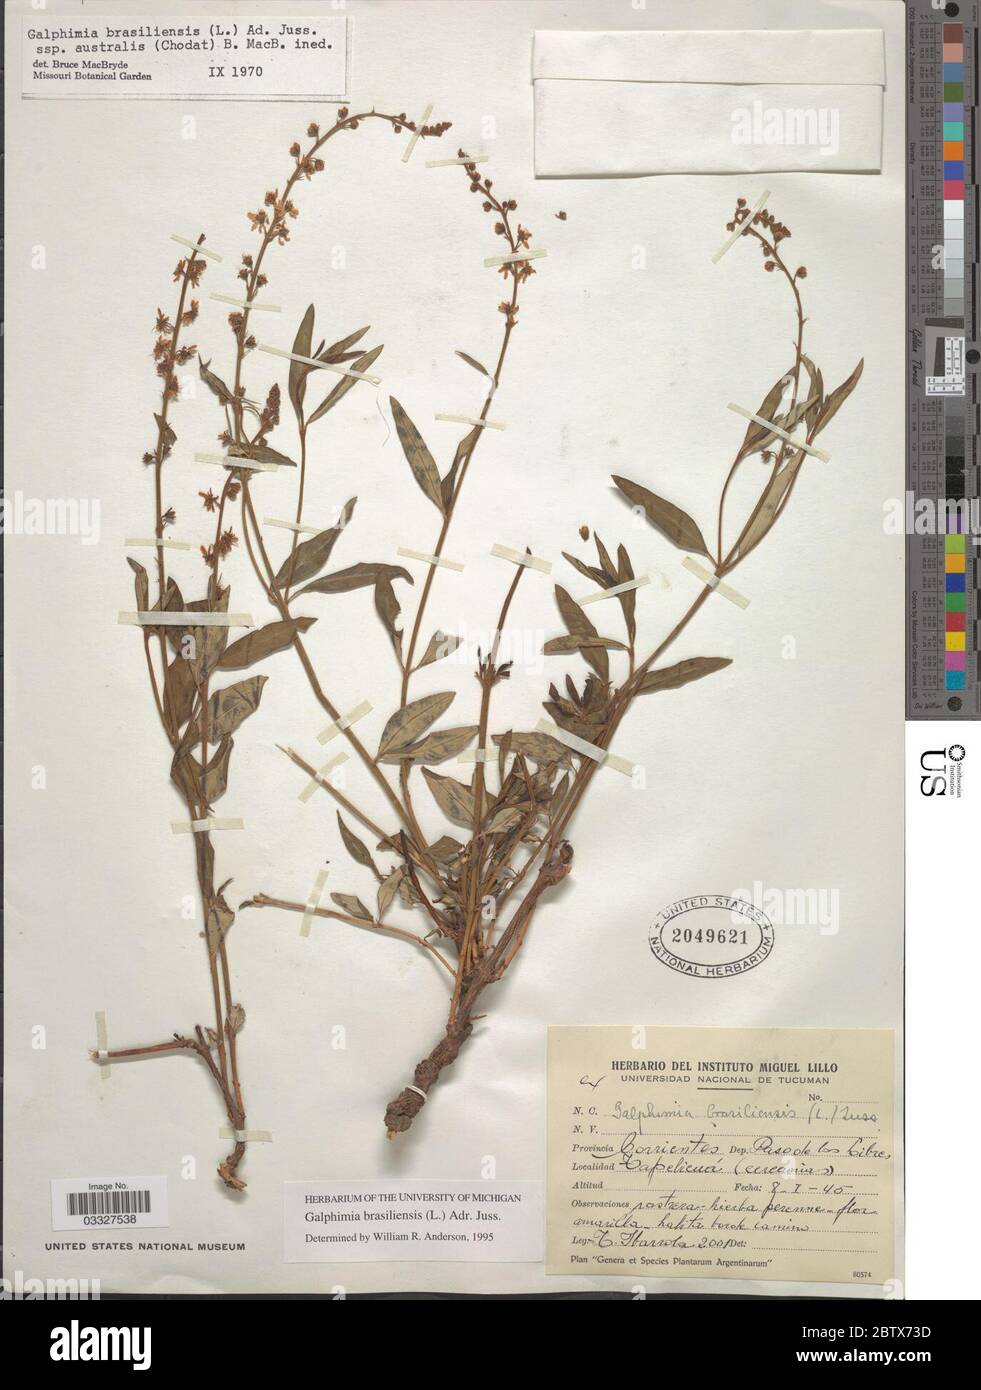 Galphimia australis Chodat. 12 Jul 20191 Stock Photo